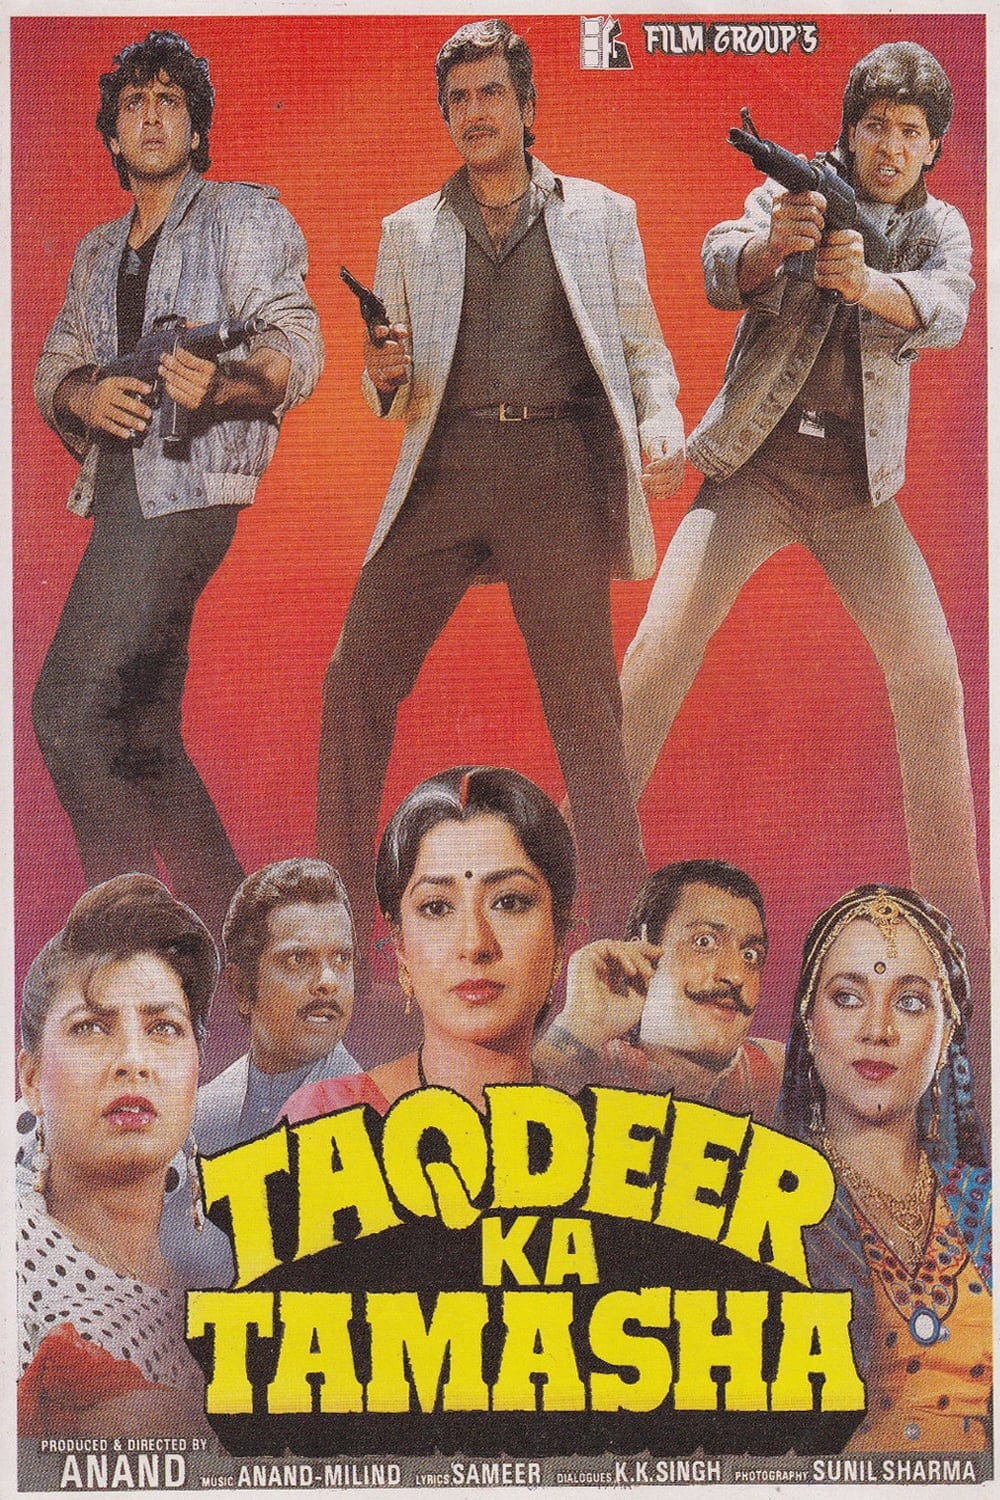 Poster for the movie "Taqdeer Ka Tamasha"